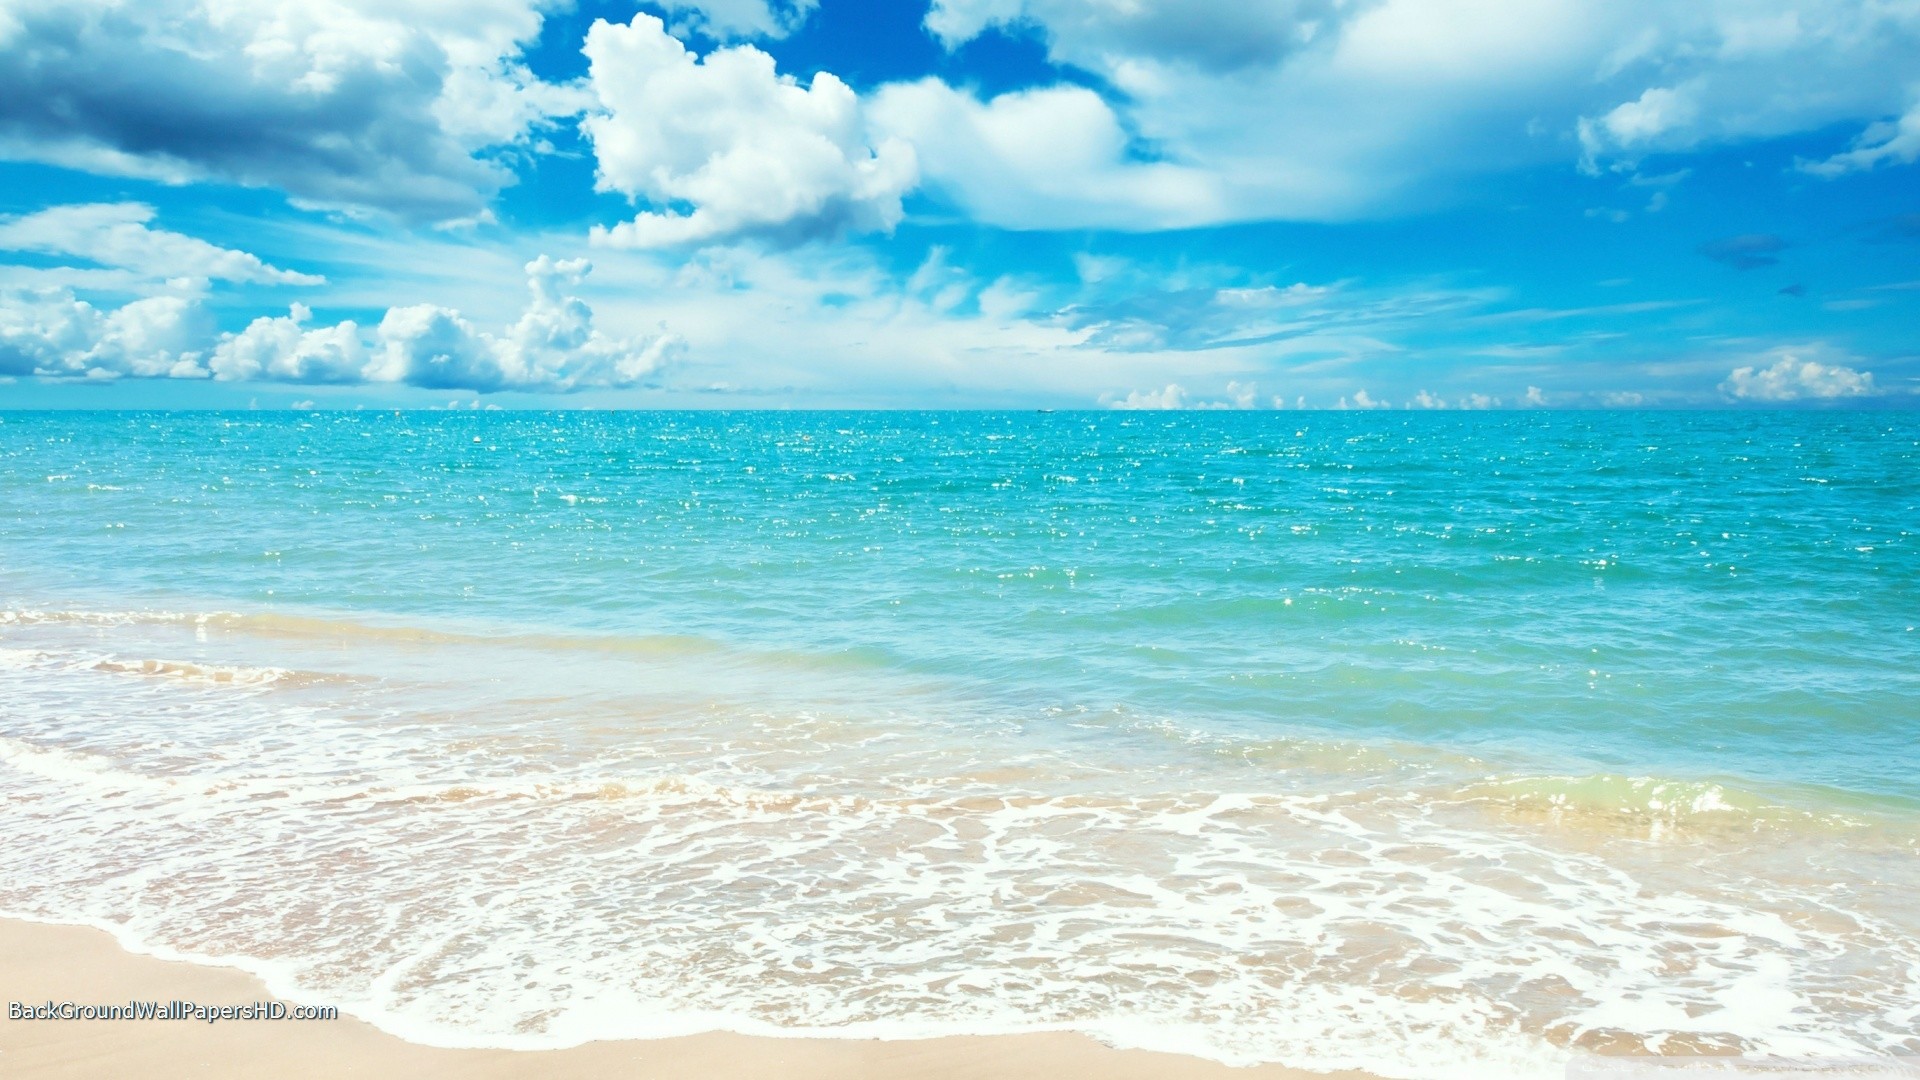 Pretty Beach Background Image